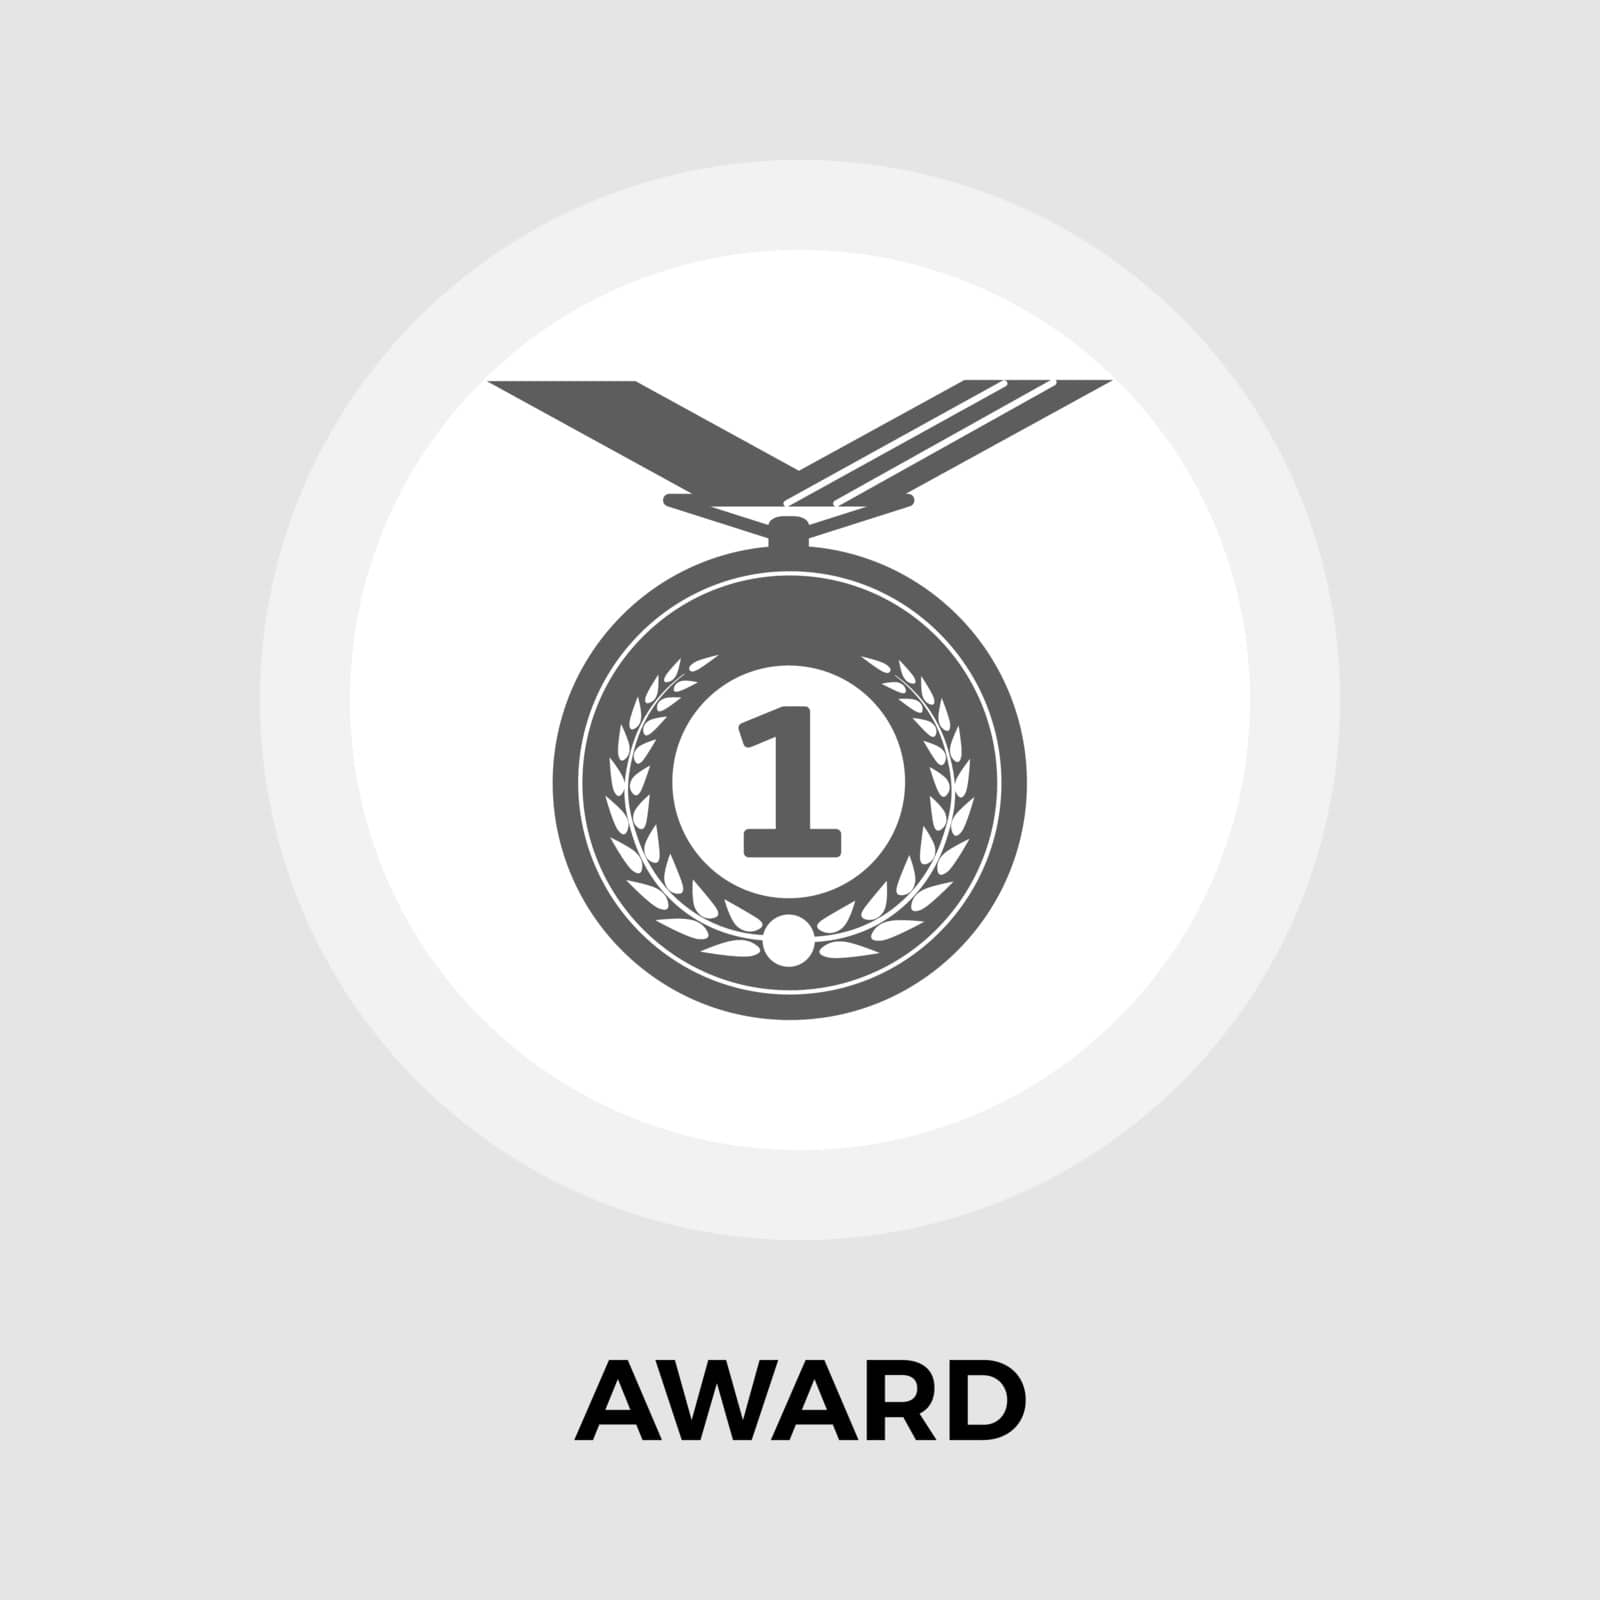 Award flat icon by smoki